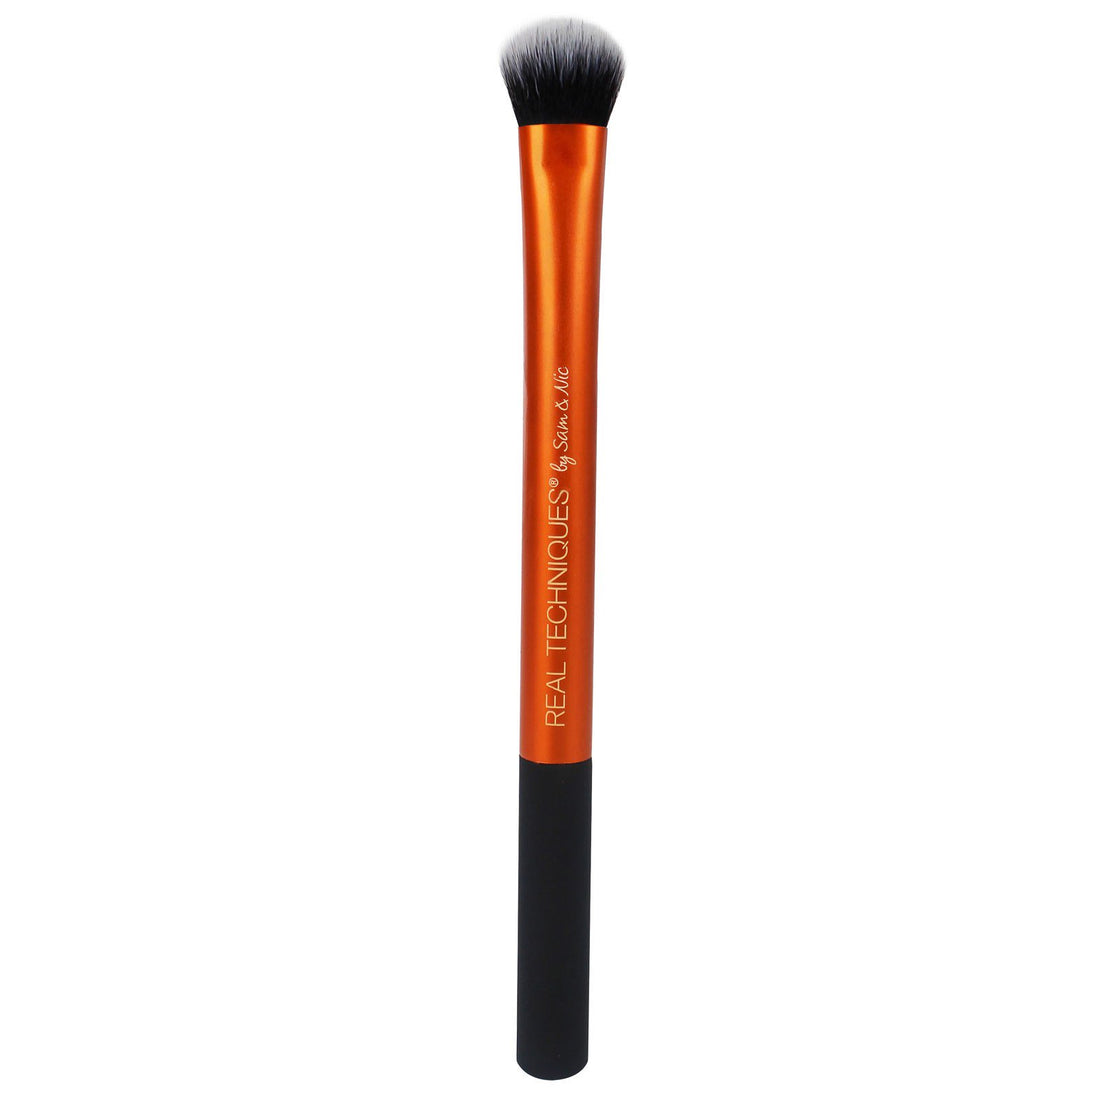 Expert concealer brush - 91542